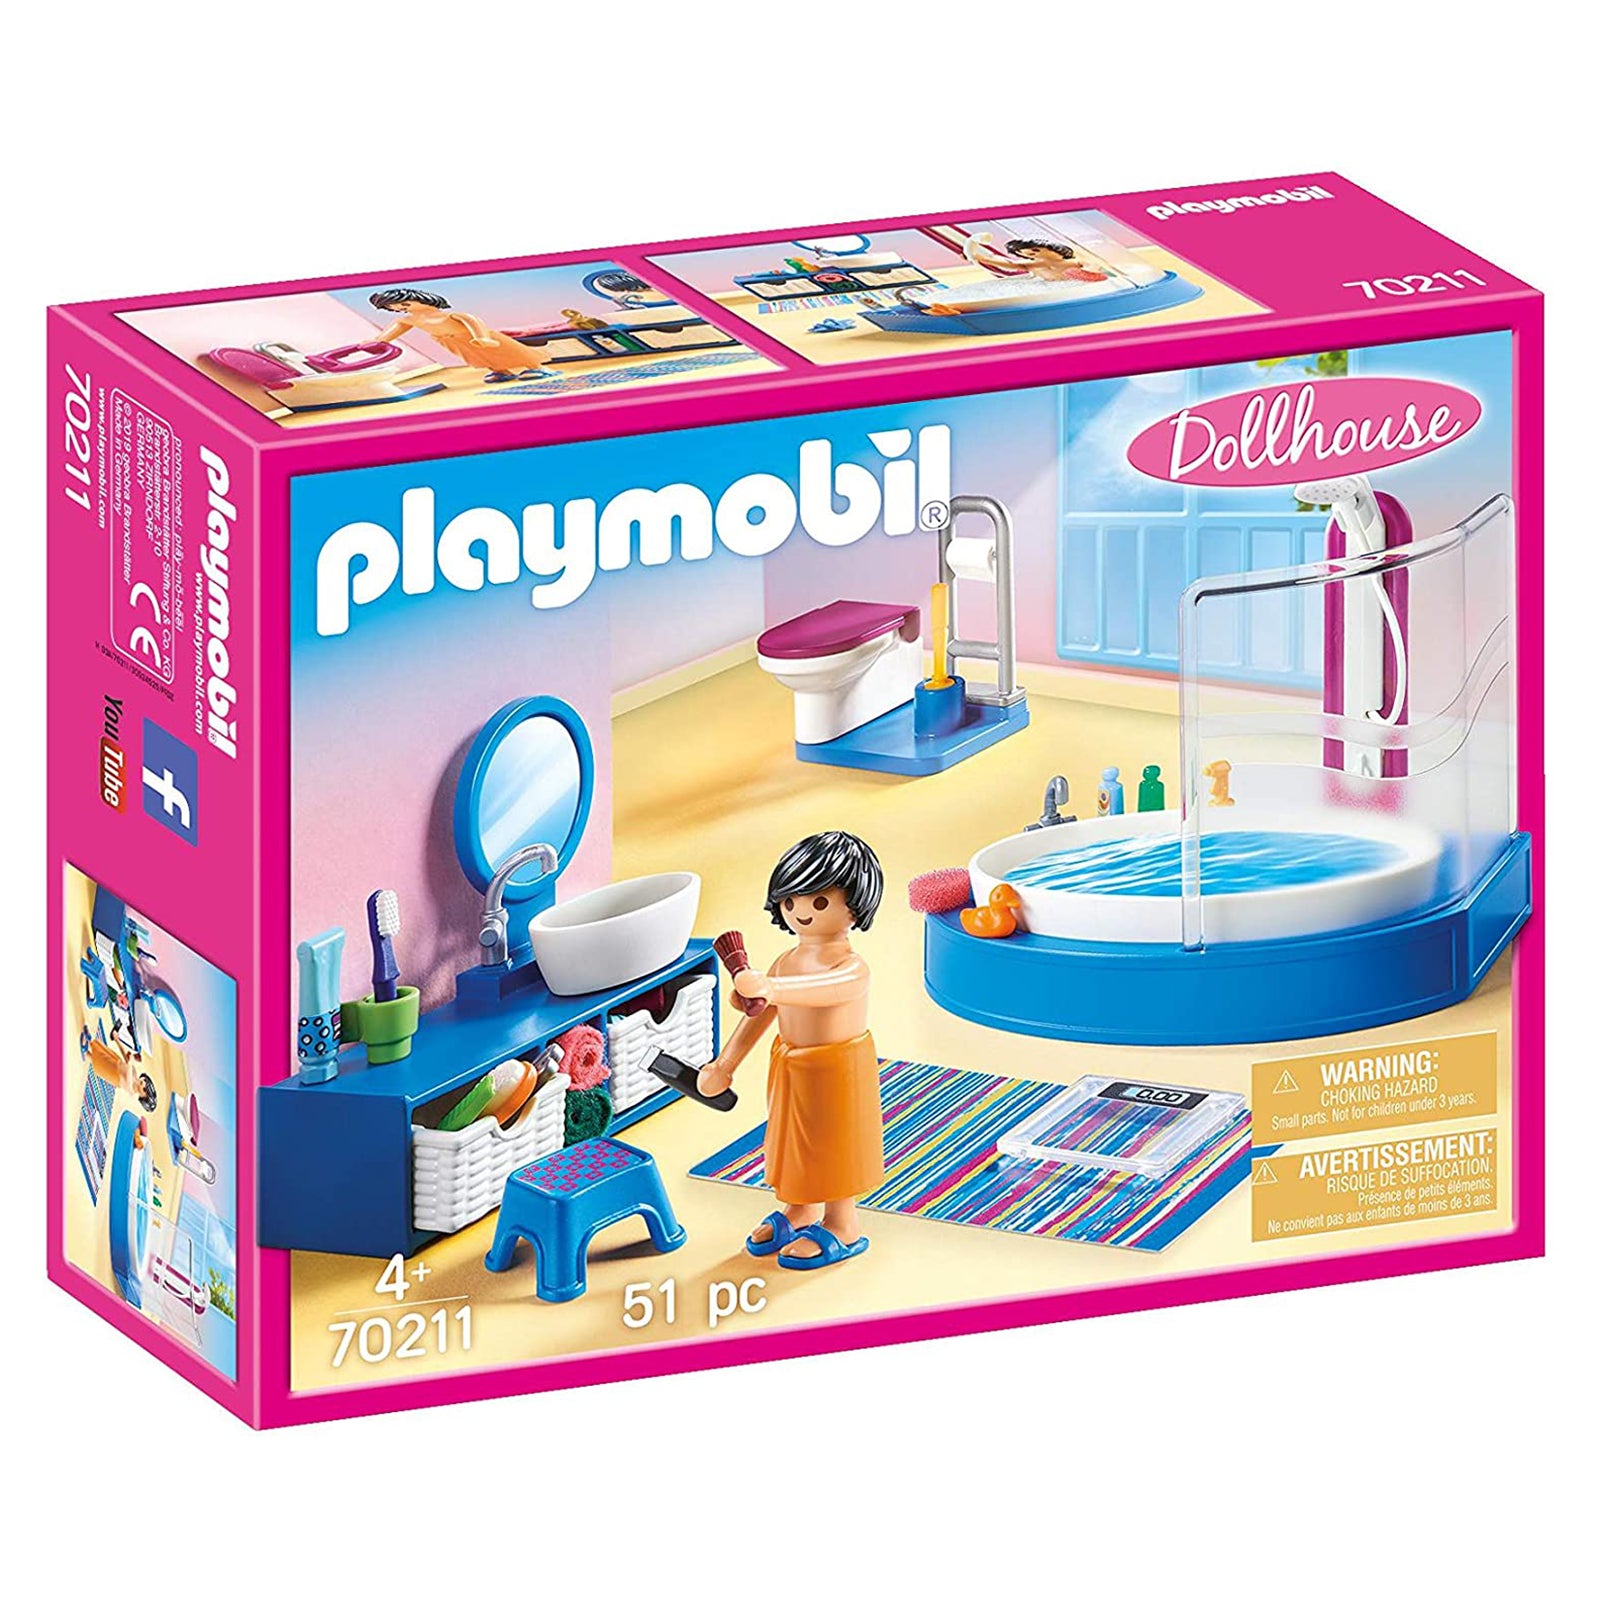 Playmobil Dollhouse With Tub Building Set 70211 | Radar Toys